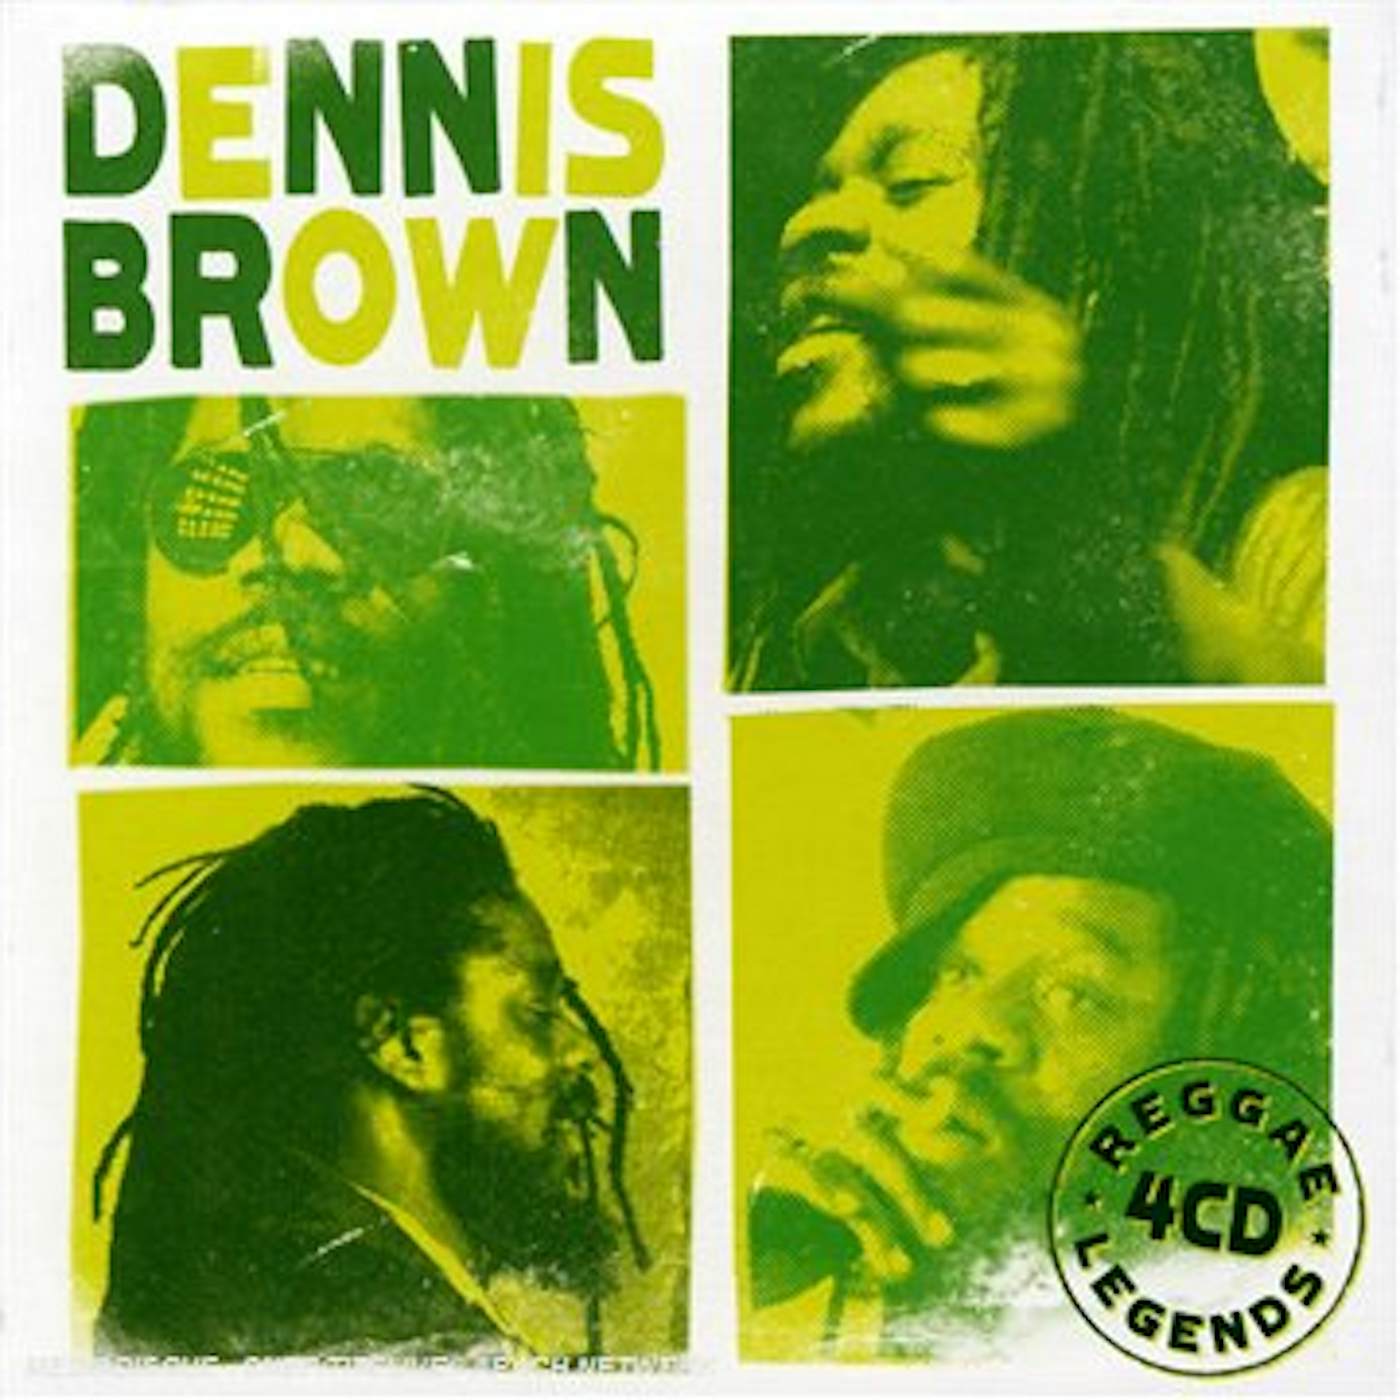 Dennis Brown REGGAE LEGENDS CD